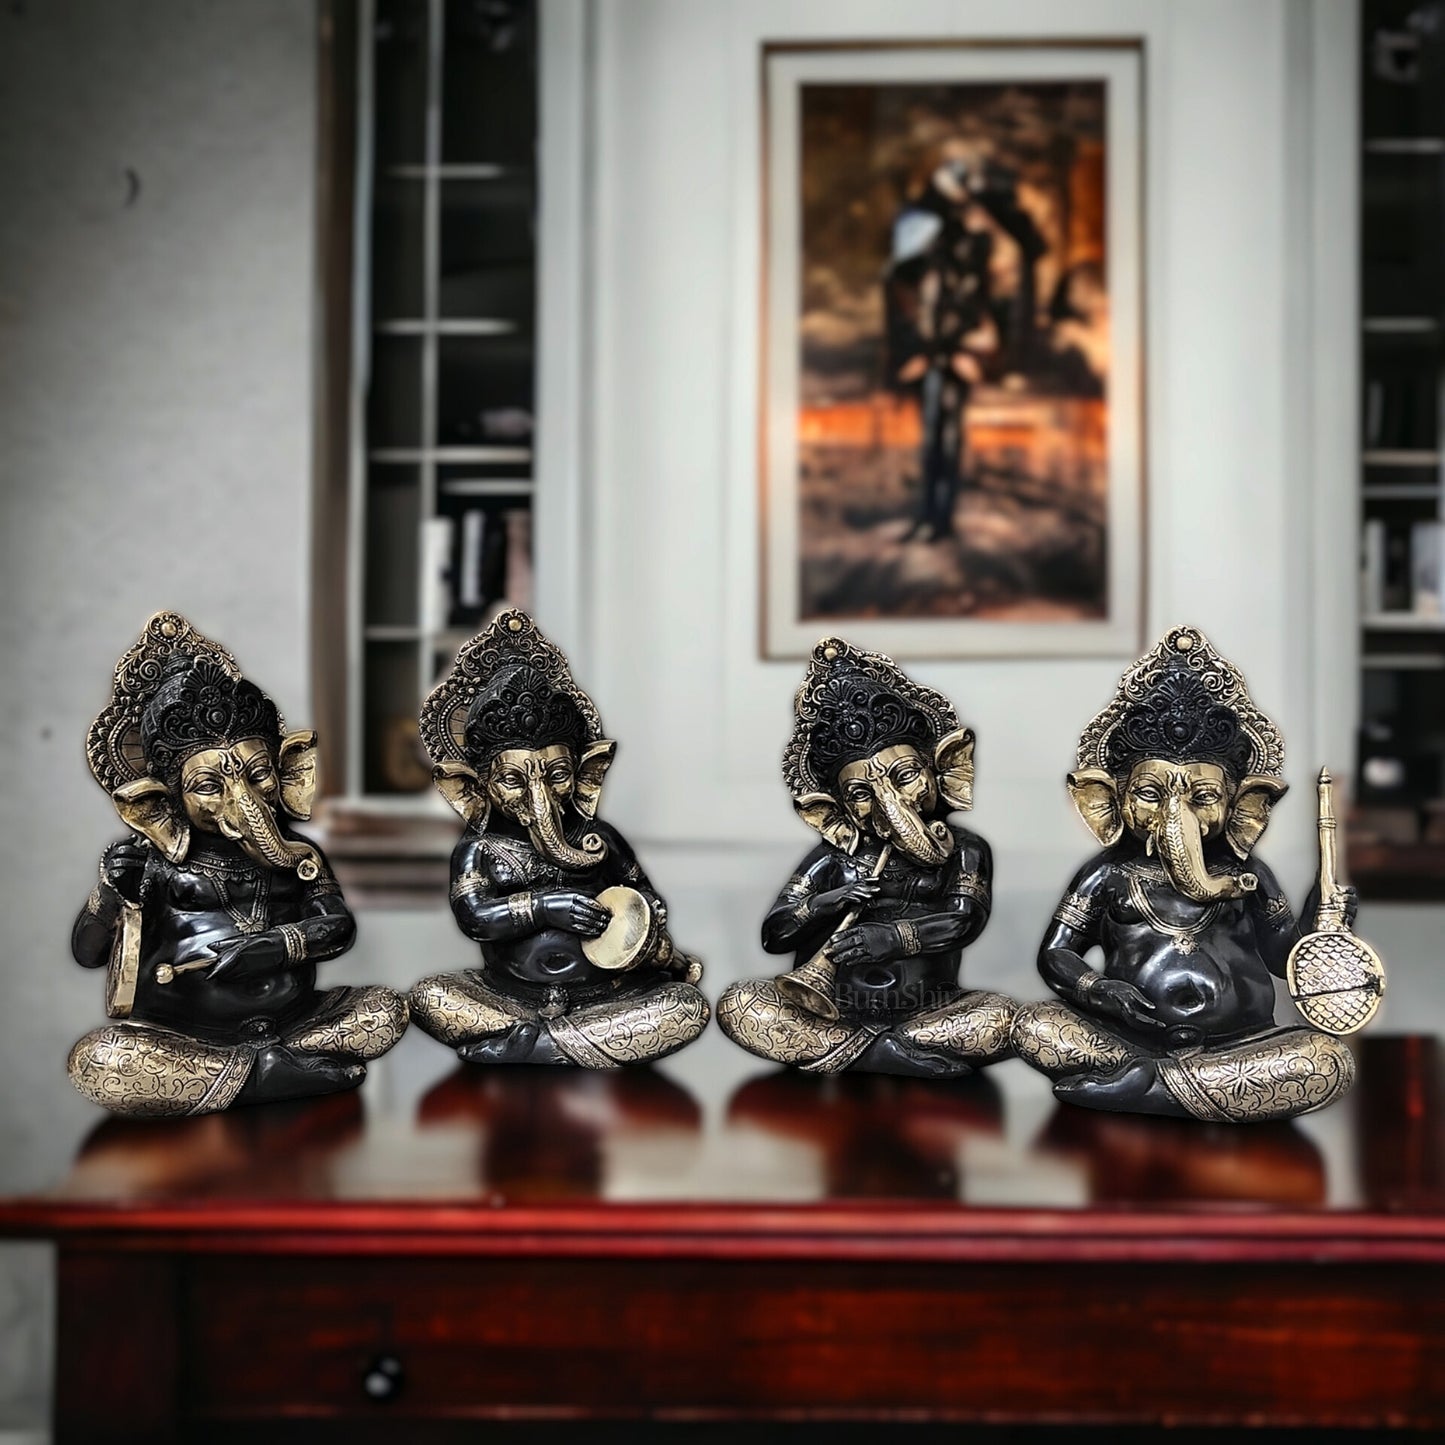 Brass Large Ganesha Music Set idols 12 inch Showpieces